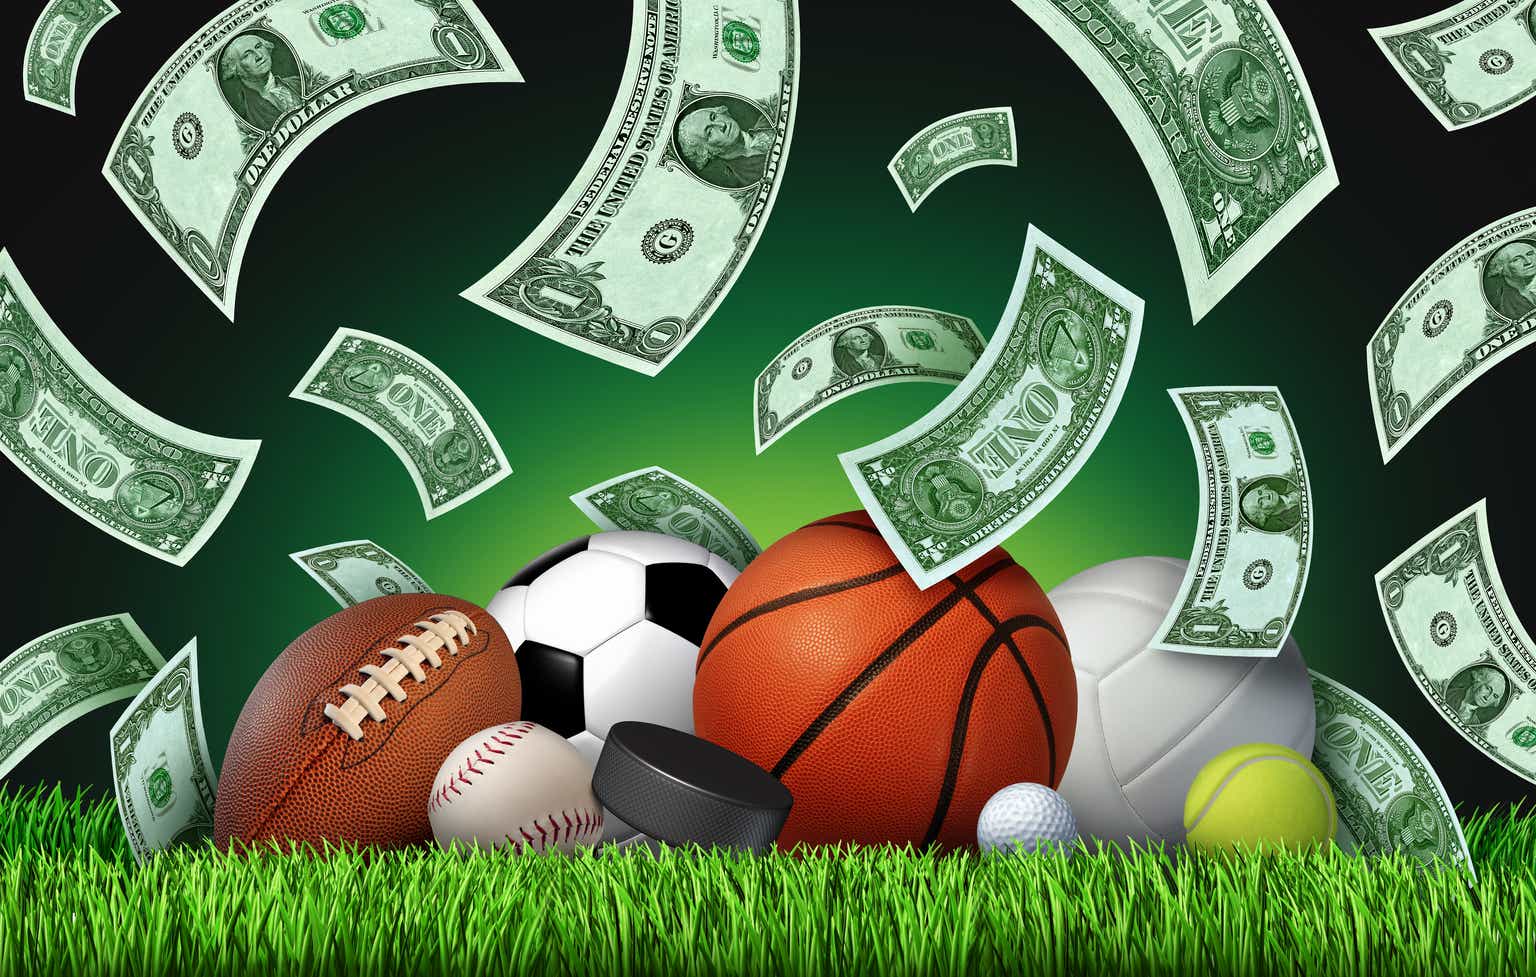 Sportradar: The Ultimate Sports Bet (NASDAQ:SRAD)